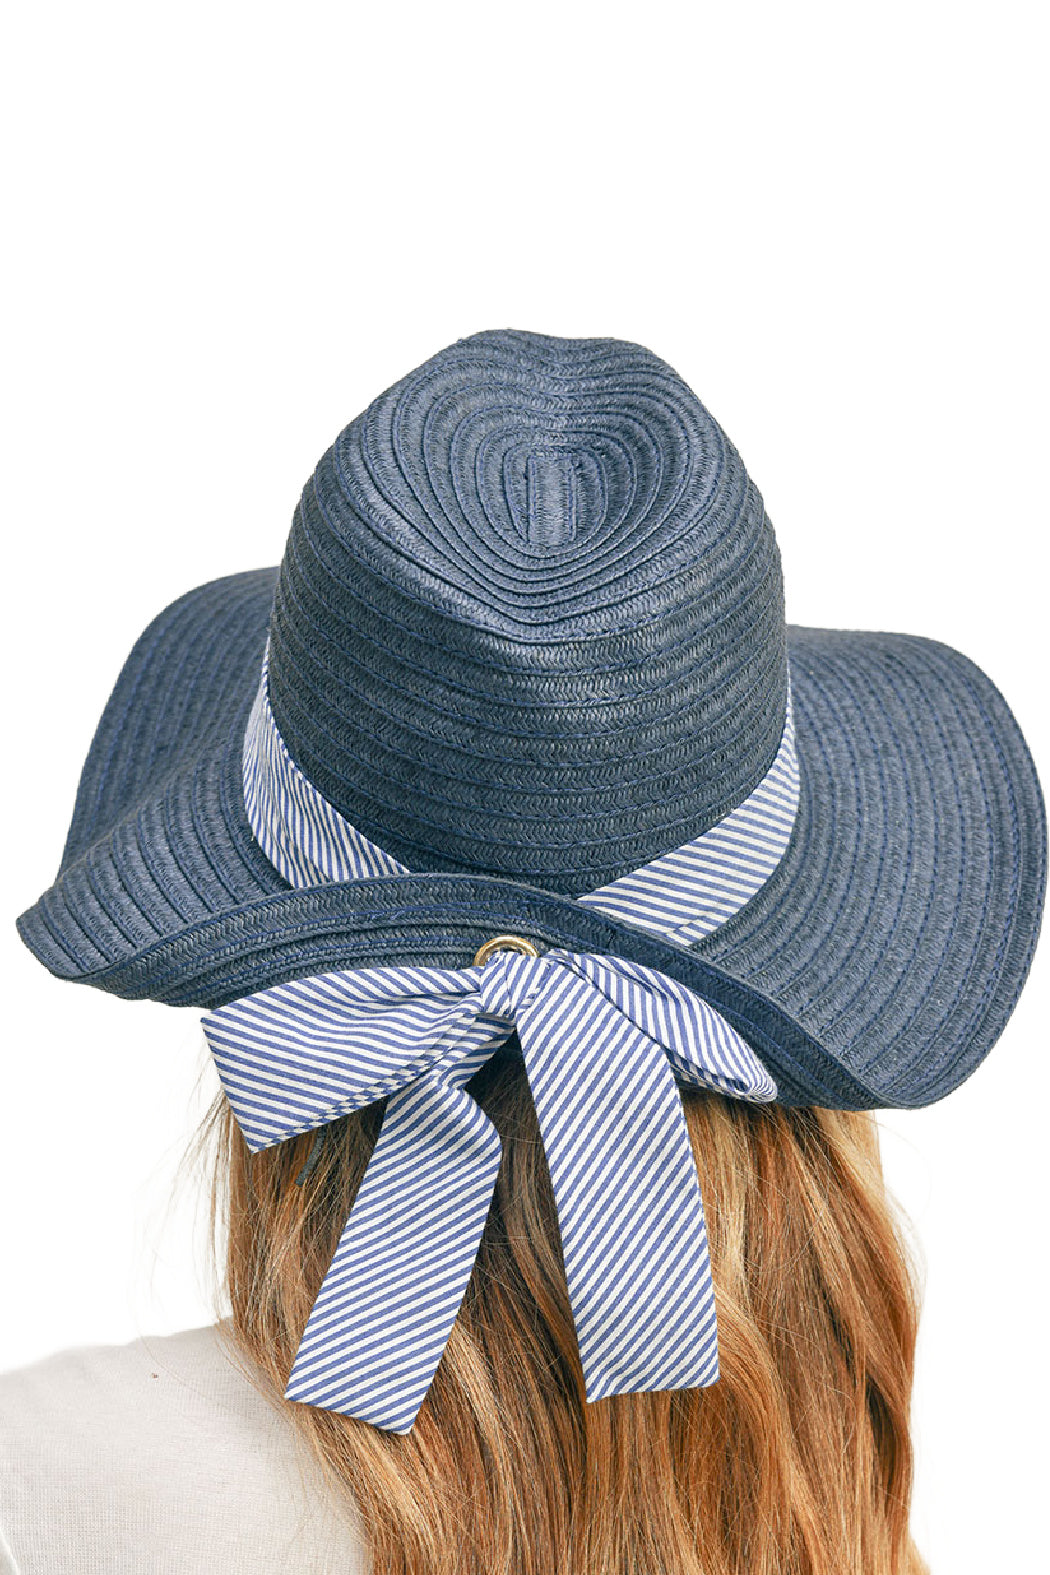 Bow Straw Panama Hat